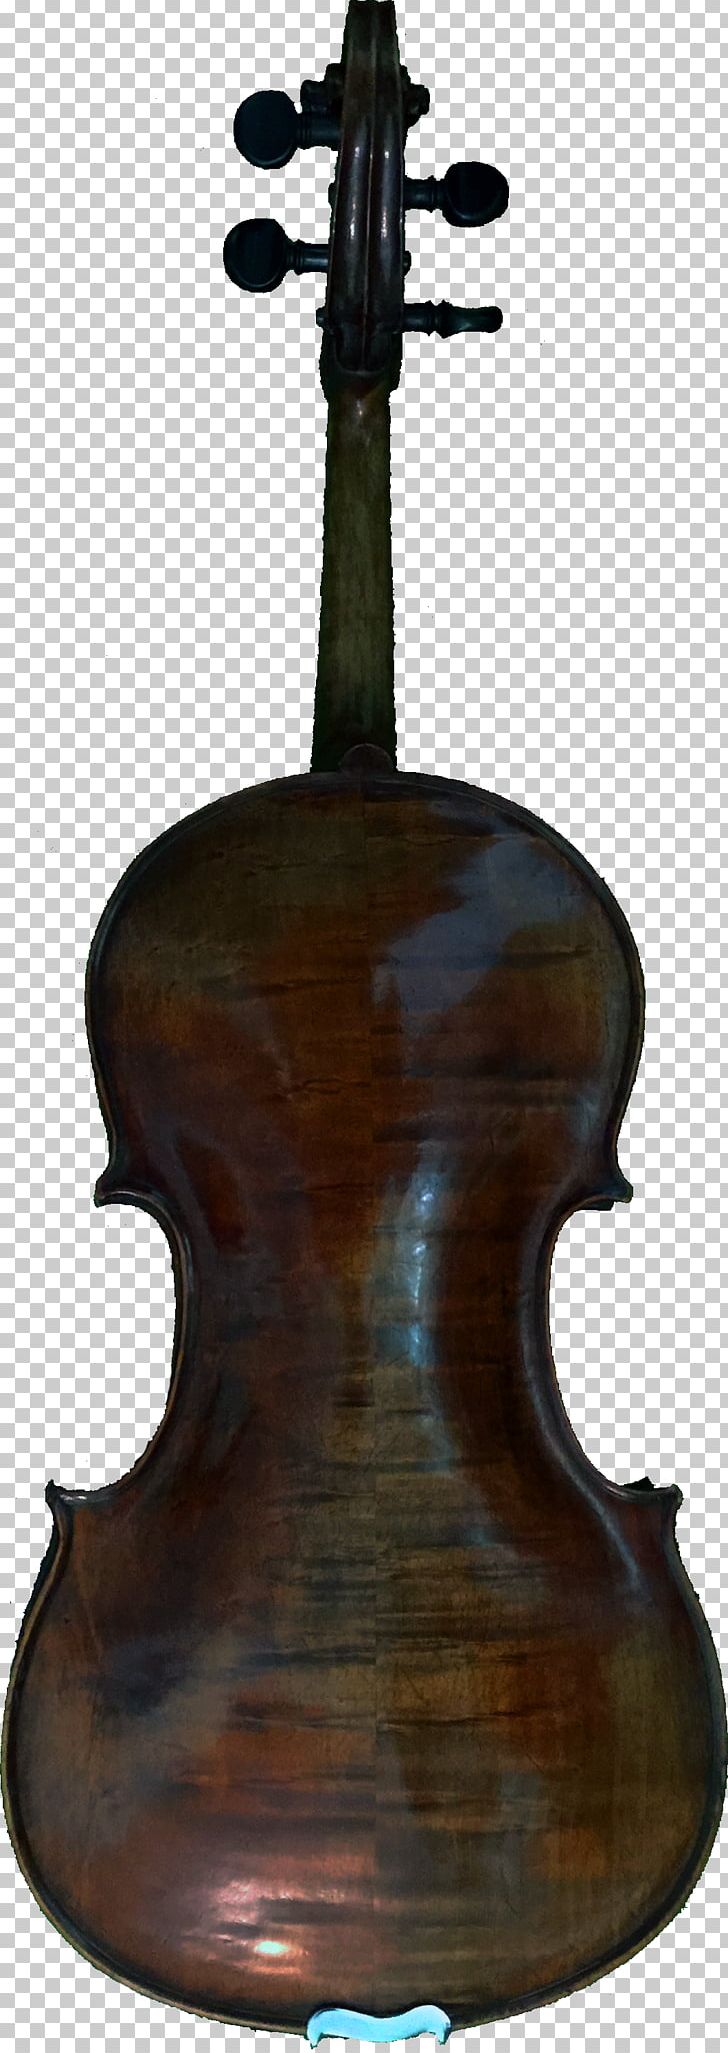 Baroque Violin Viola Luthier History Of The Violin PNG, Clipart, Antonio Stradivari, Baroque Violin, Bass Violin, Bow, Bowed String Instrument Free PNG Download